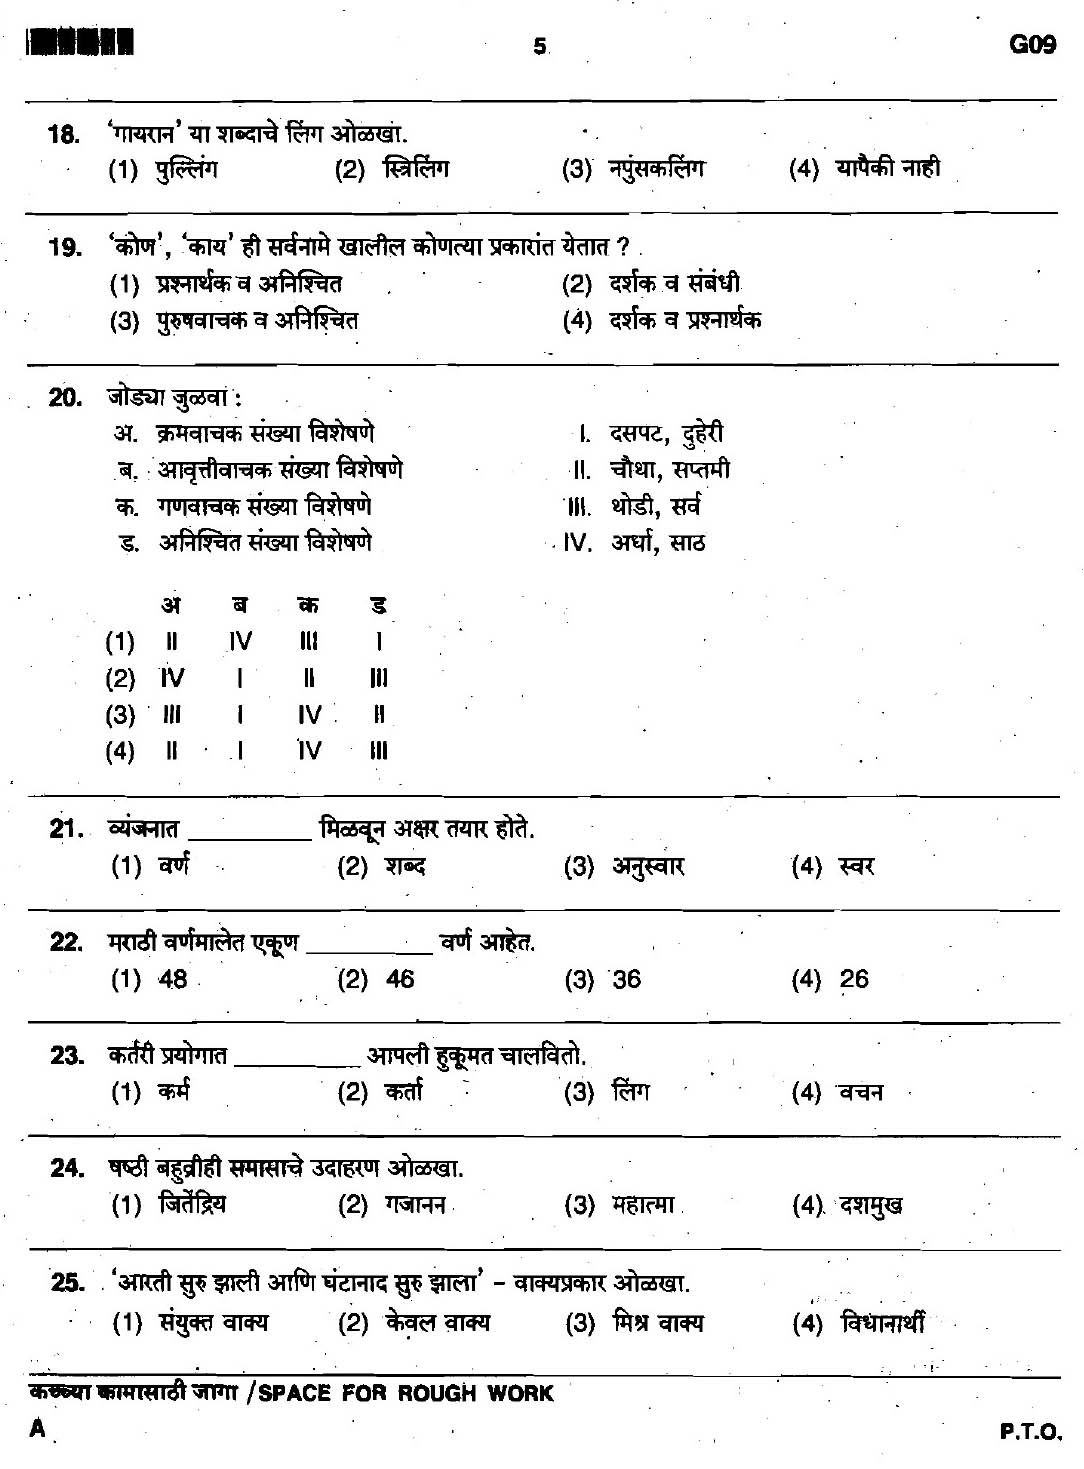 Maharashtra PSC Clerk Typist Preliminary Exam Question Paper 2017 4